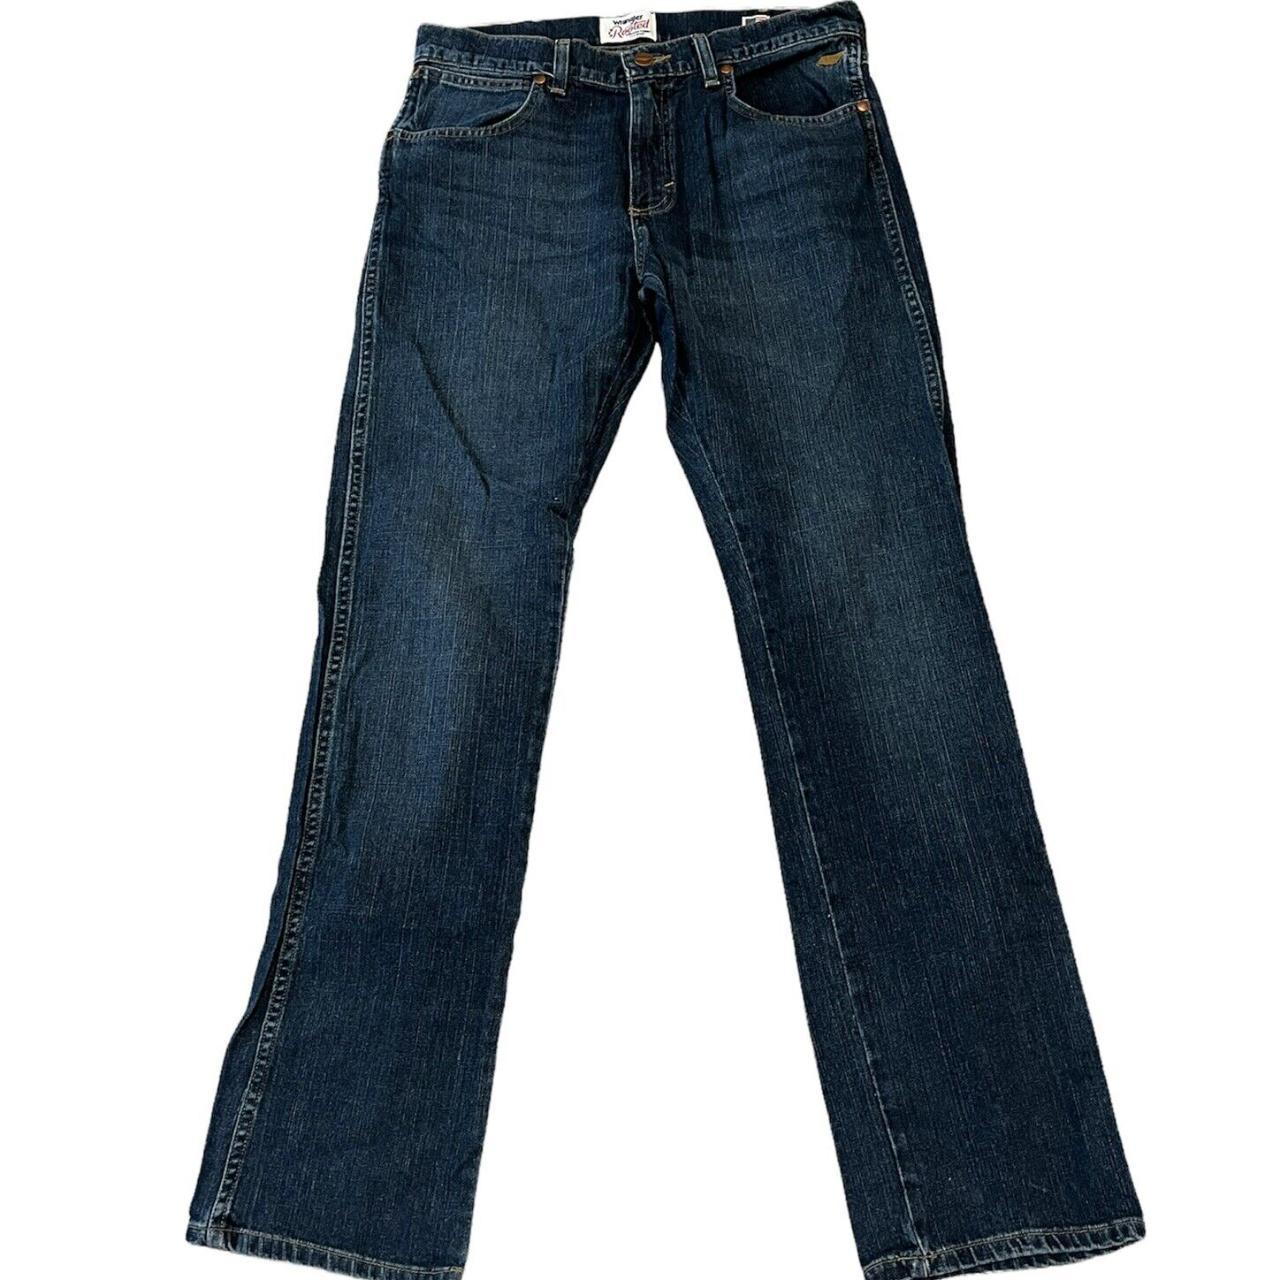 Wrangler Rooted Denim Jeans 33x32 North Carolina... - Depop